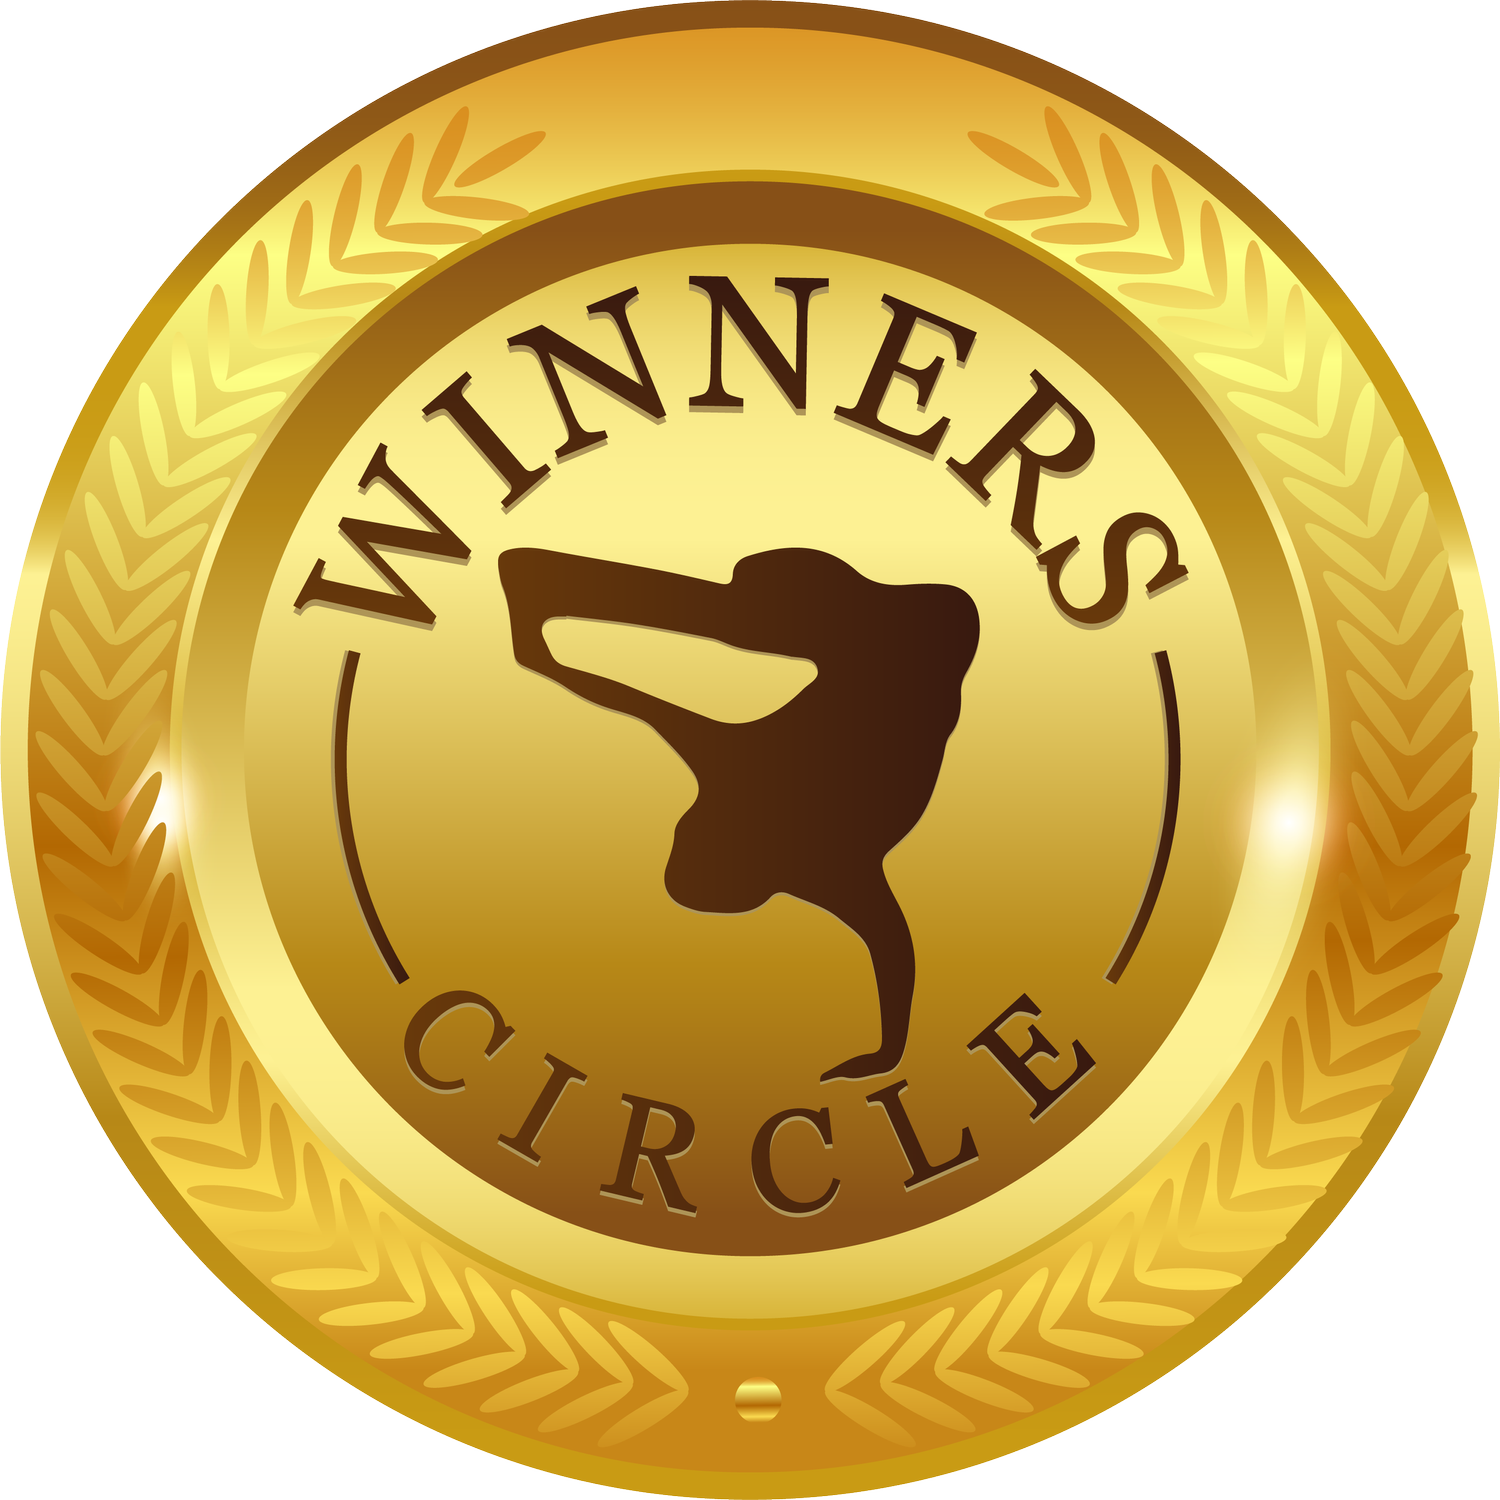 Winners Circle 